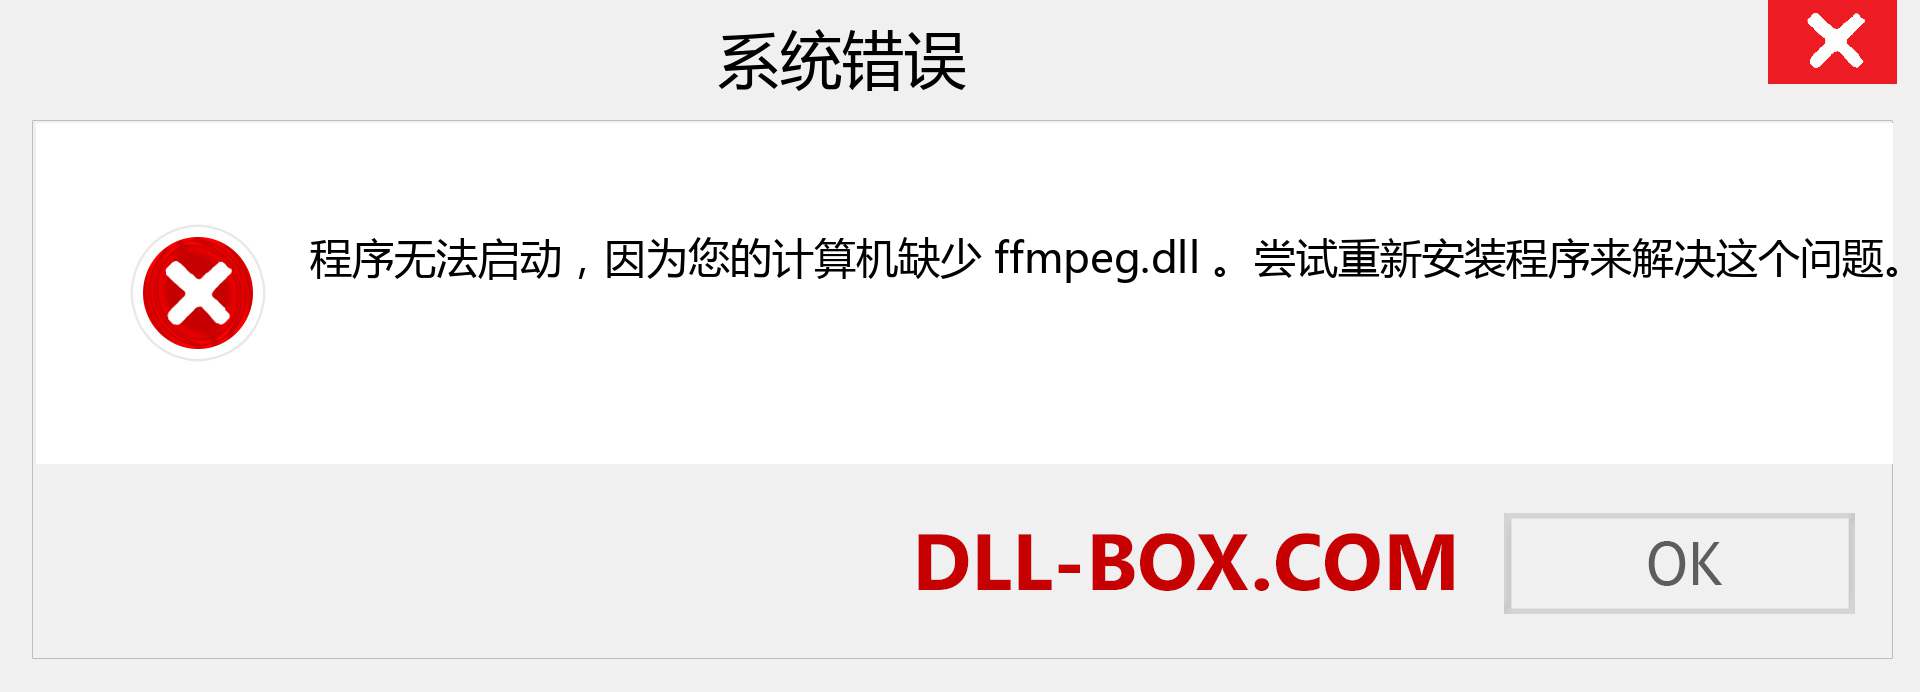 ffmpeg.dll 文件丢失？。 适用于 Windows 7、8、10 的下载 - 修复 Windows、照片、图像上的 ffmpeg dll 丢失错误